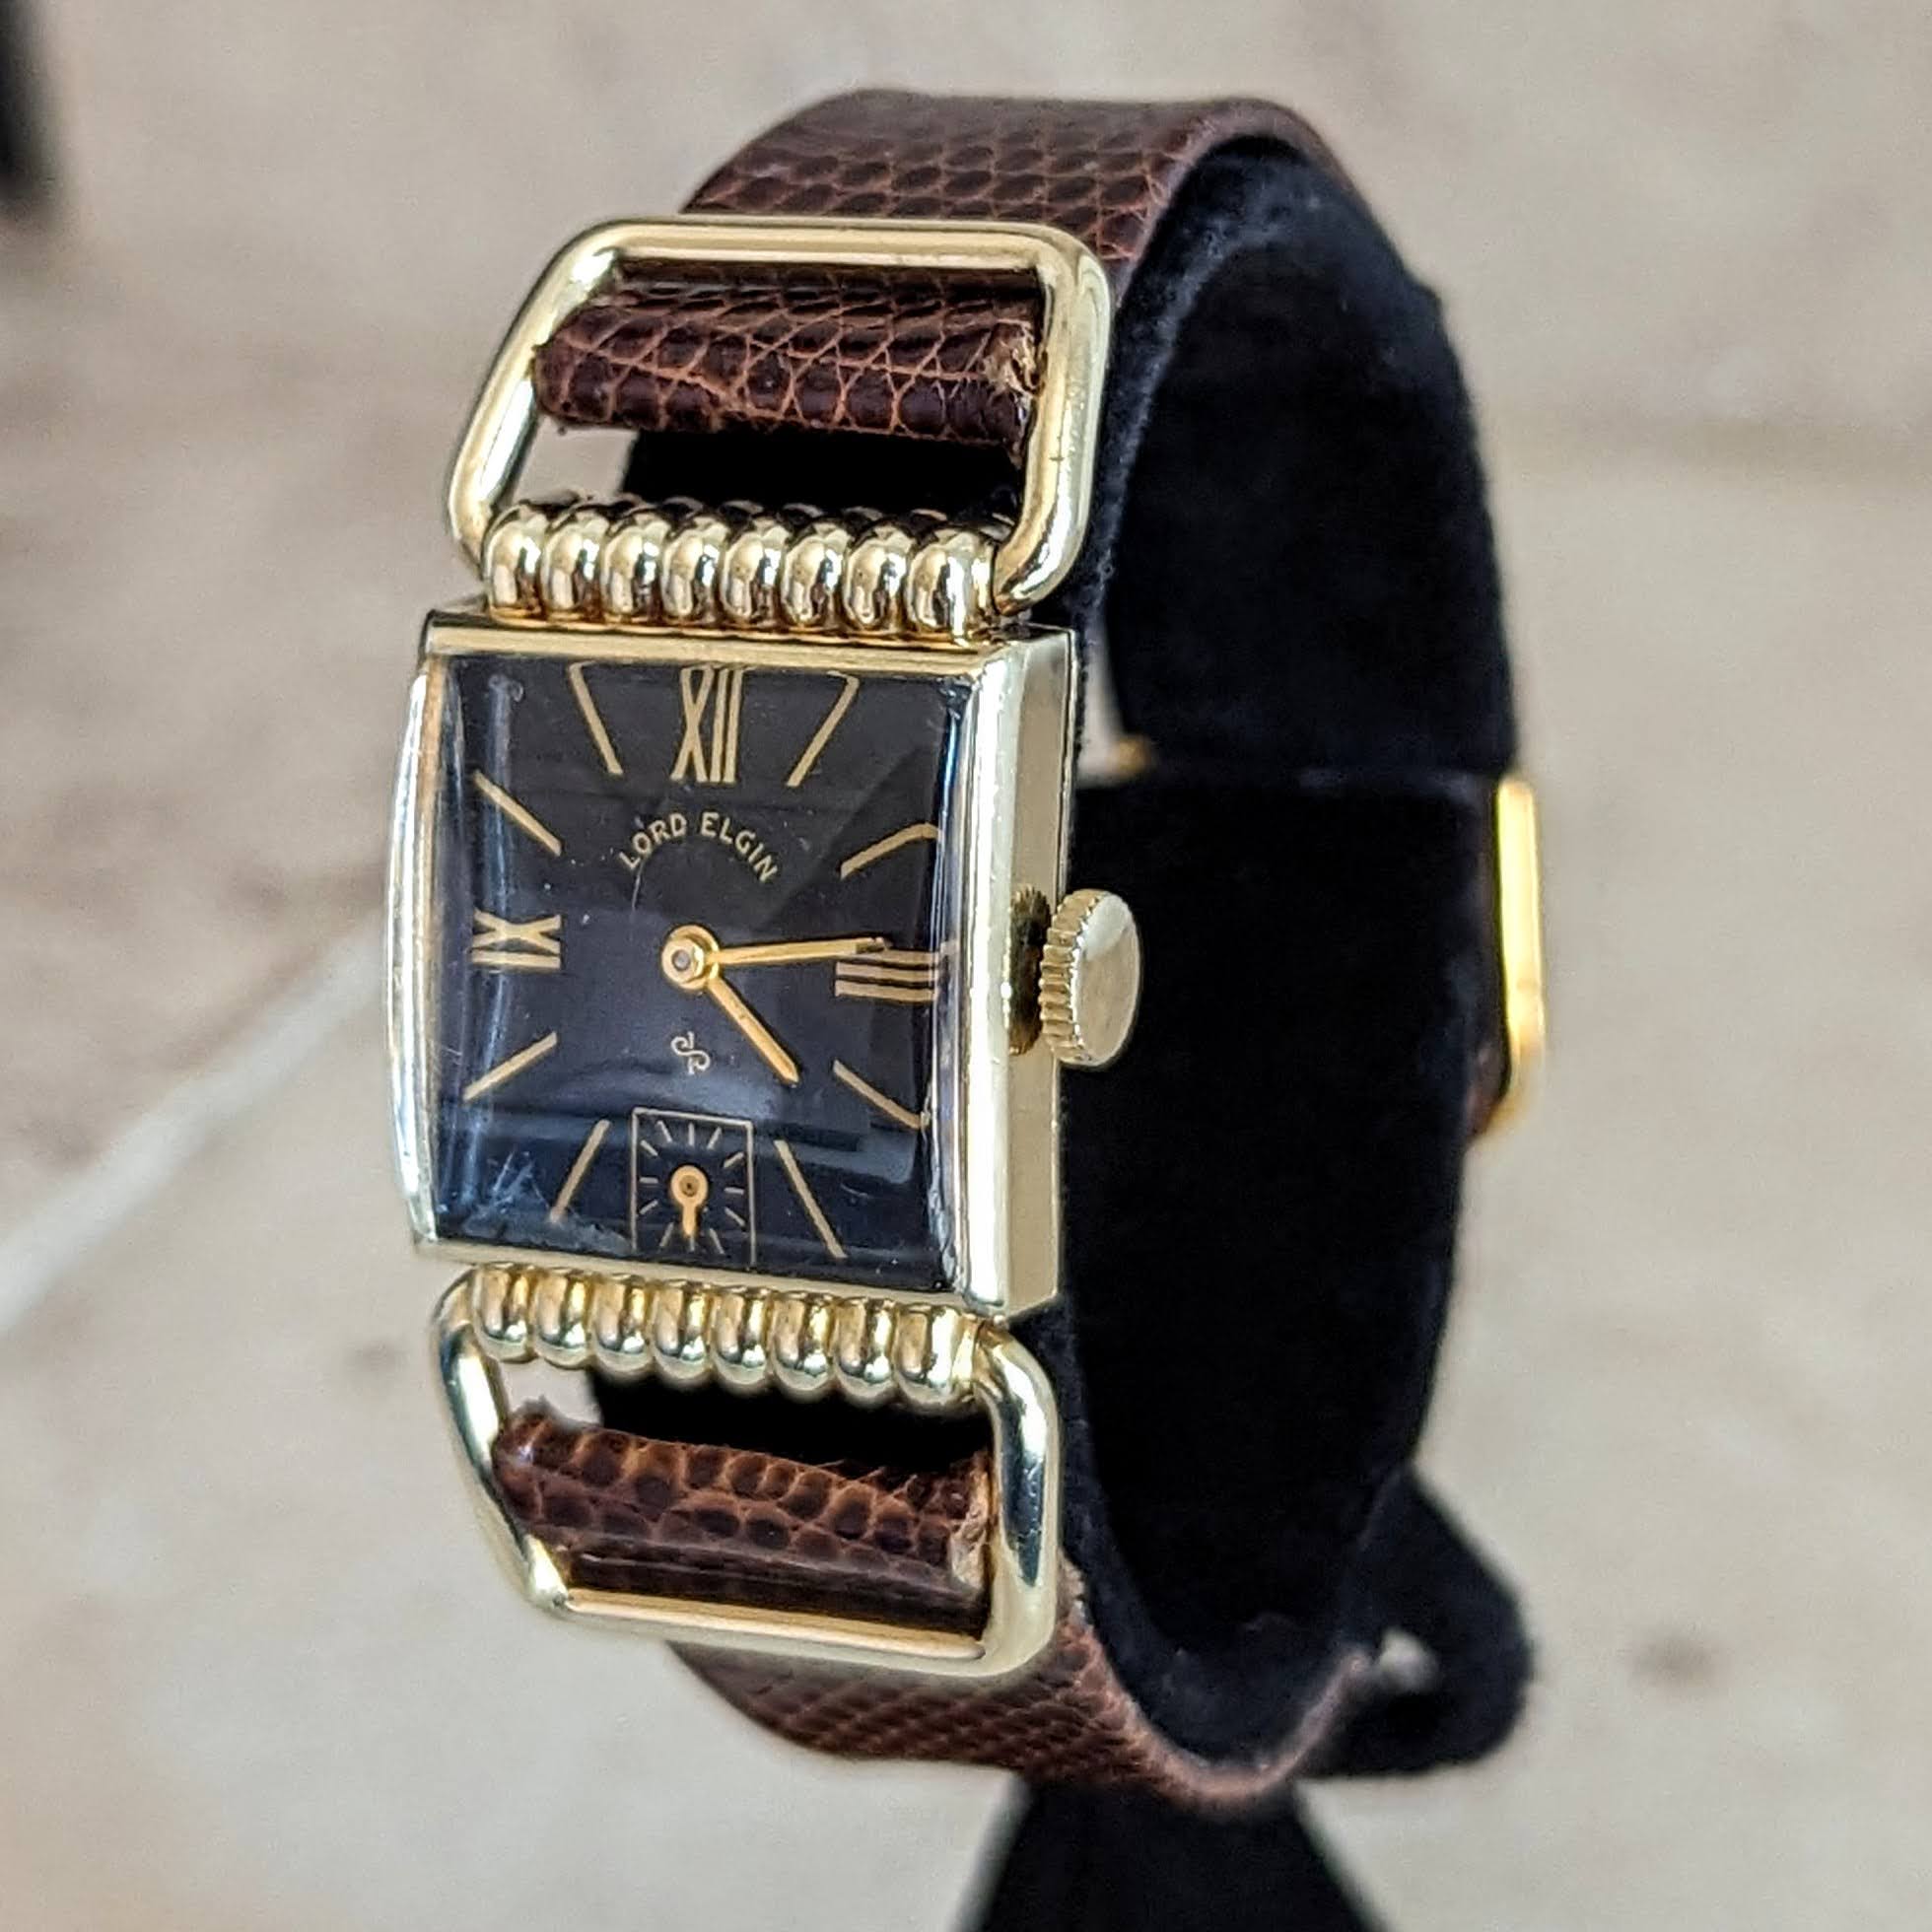 1950 LORD ELGIN Drivers Watch Ref. 4602 21 Jewels 4 ADJ’s Grade 626 U.S.A. Made Wristwatch